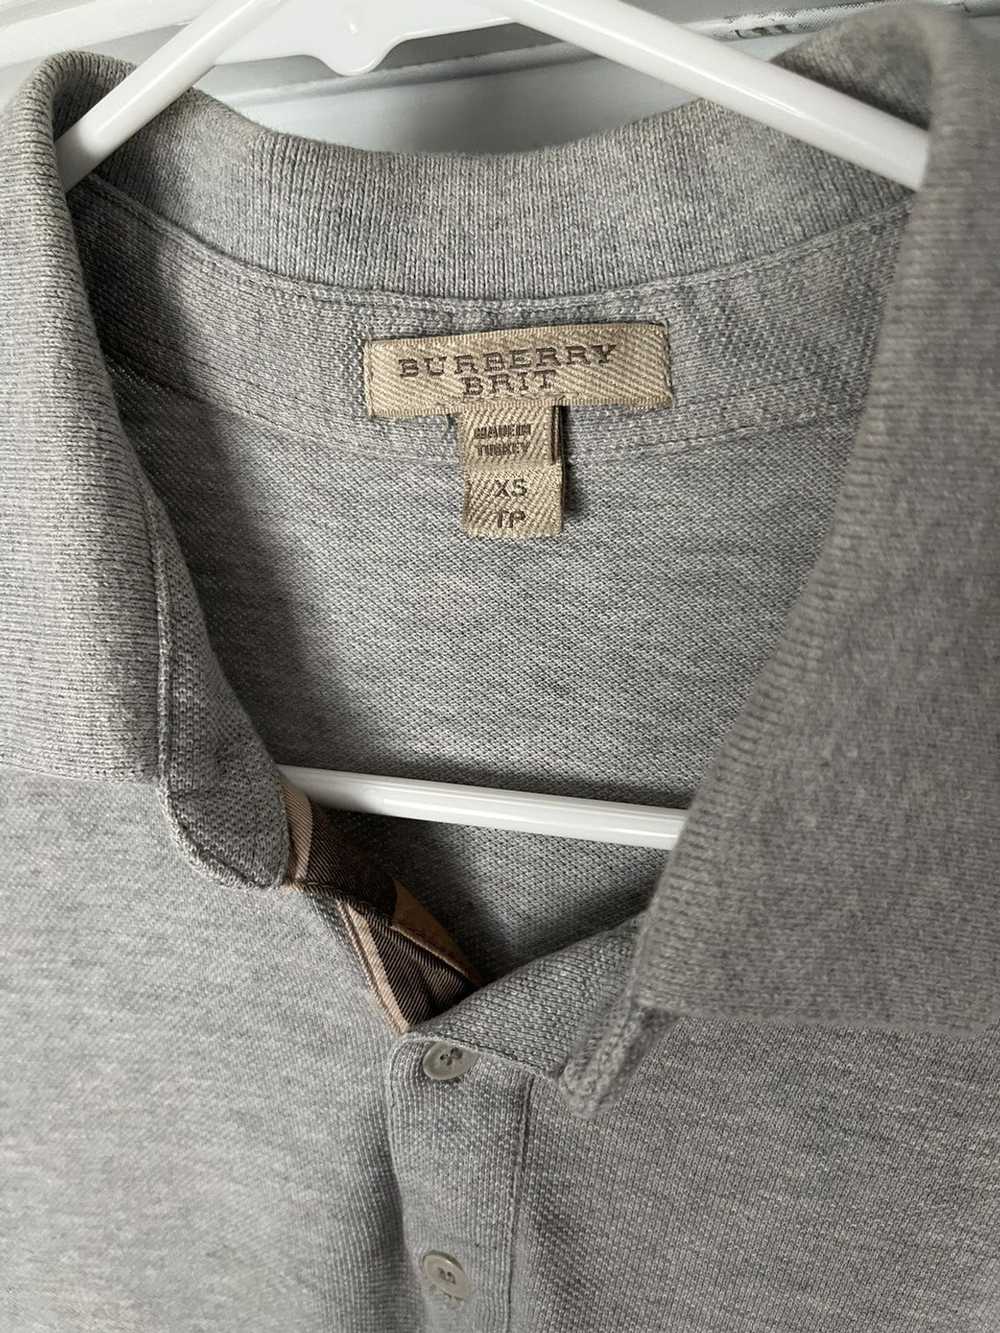 Burberry Burberry “Polo” Menswear - image 3